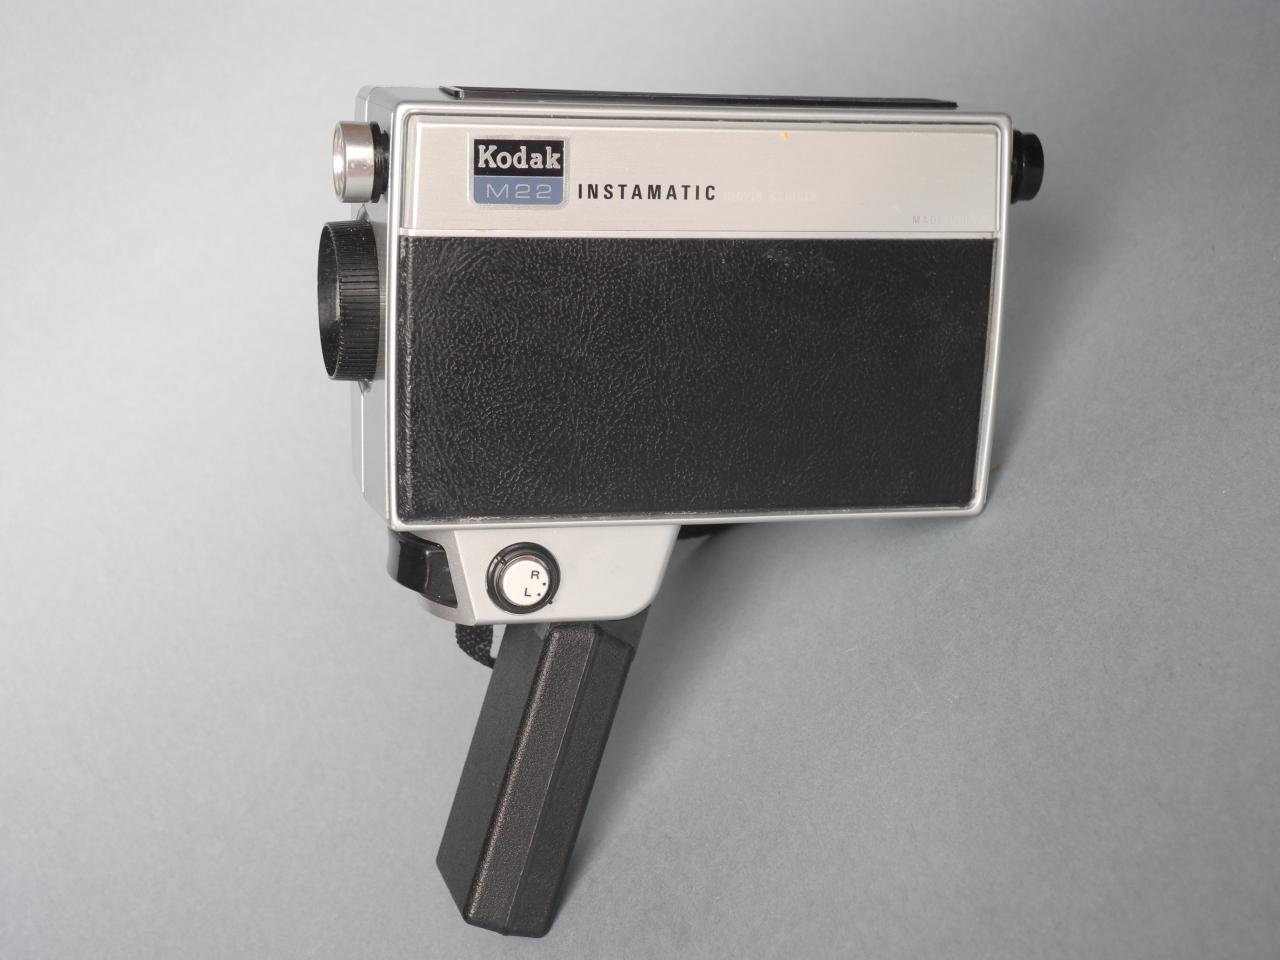 *Kodak caméra instamatic M 22 super 8*